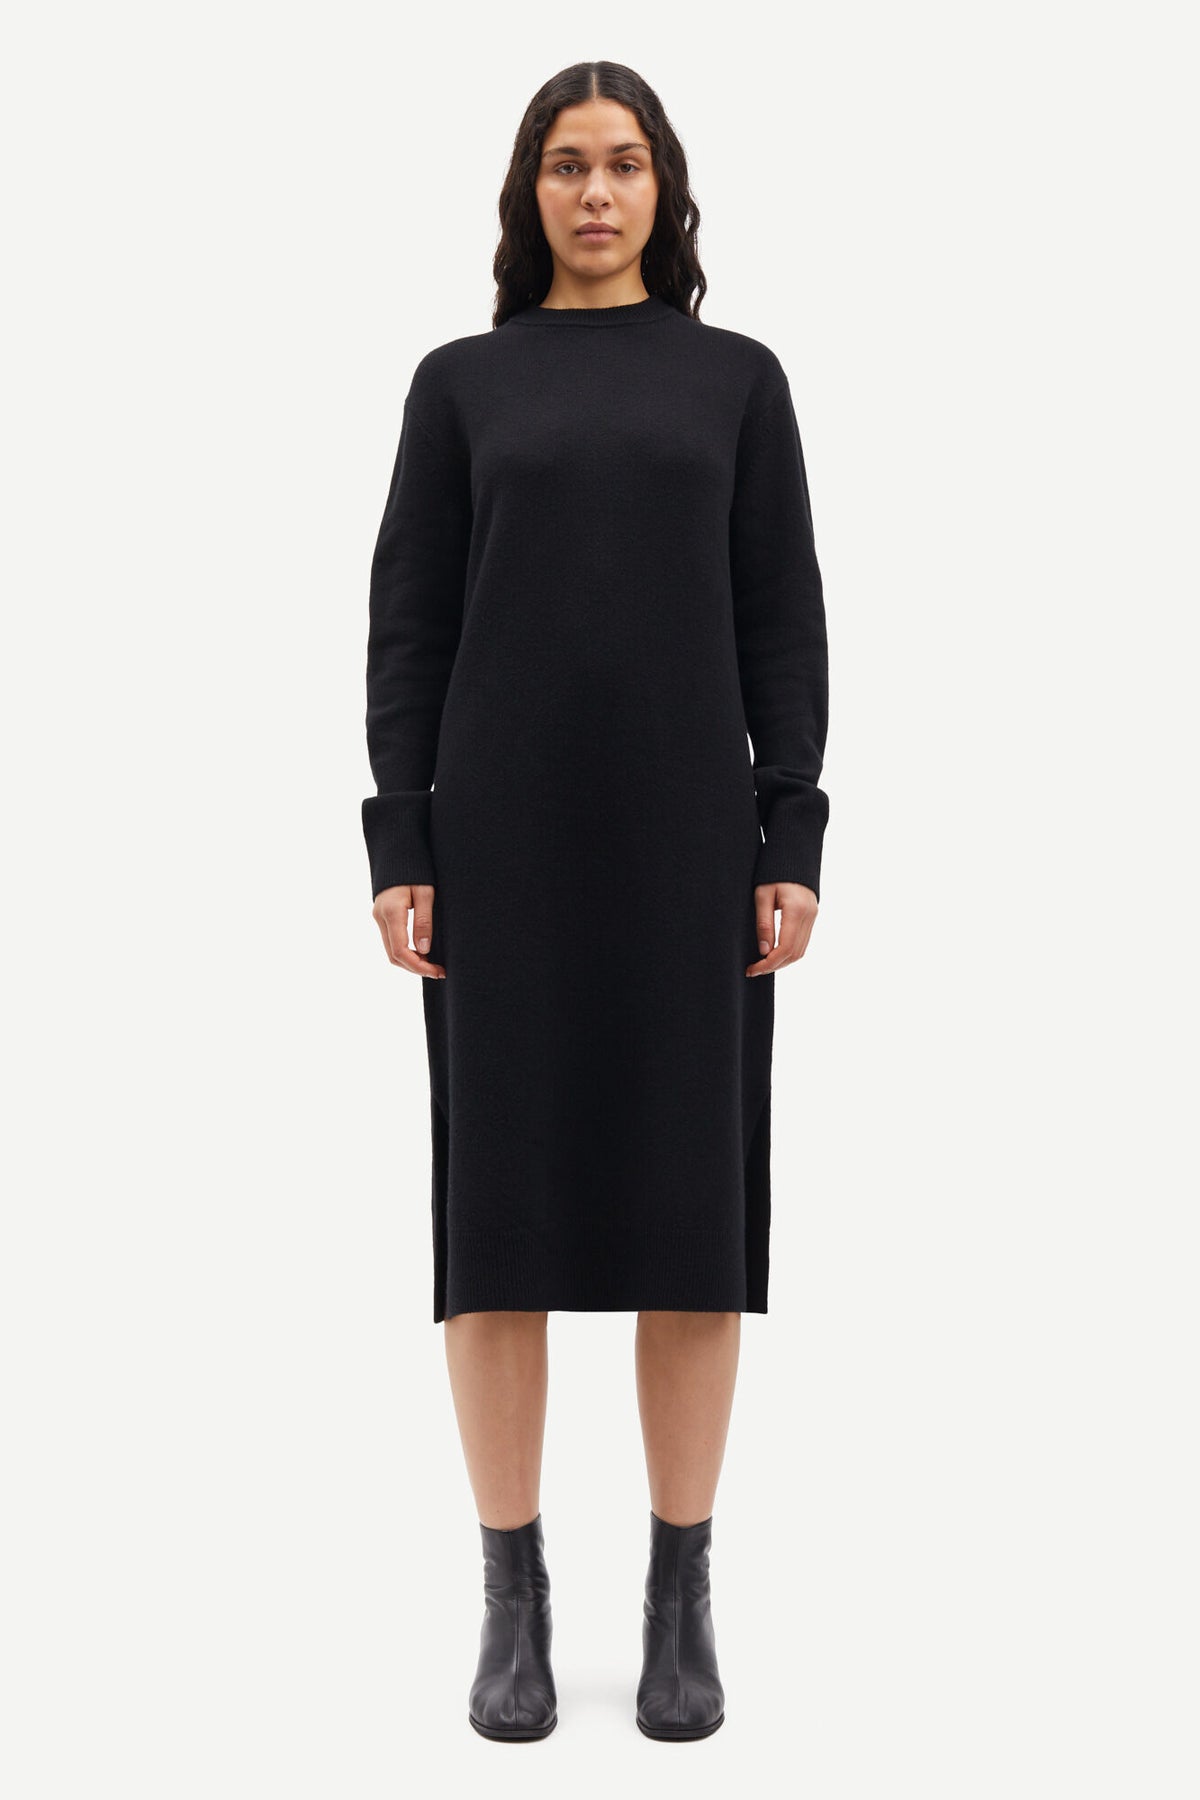 Midi merino wool black dress with long sleeves and crew neck